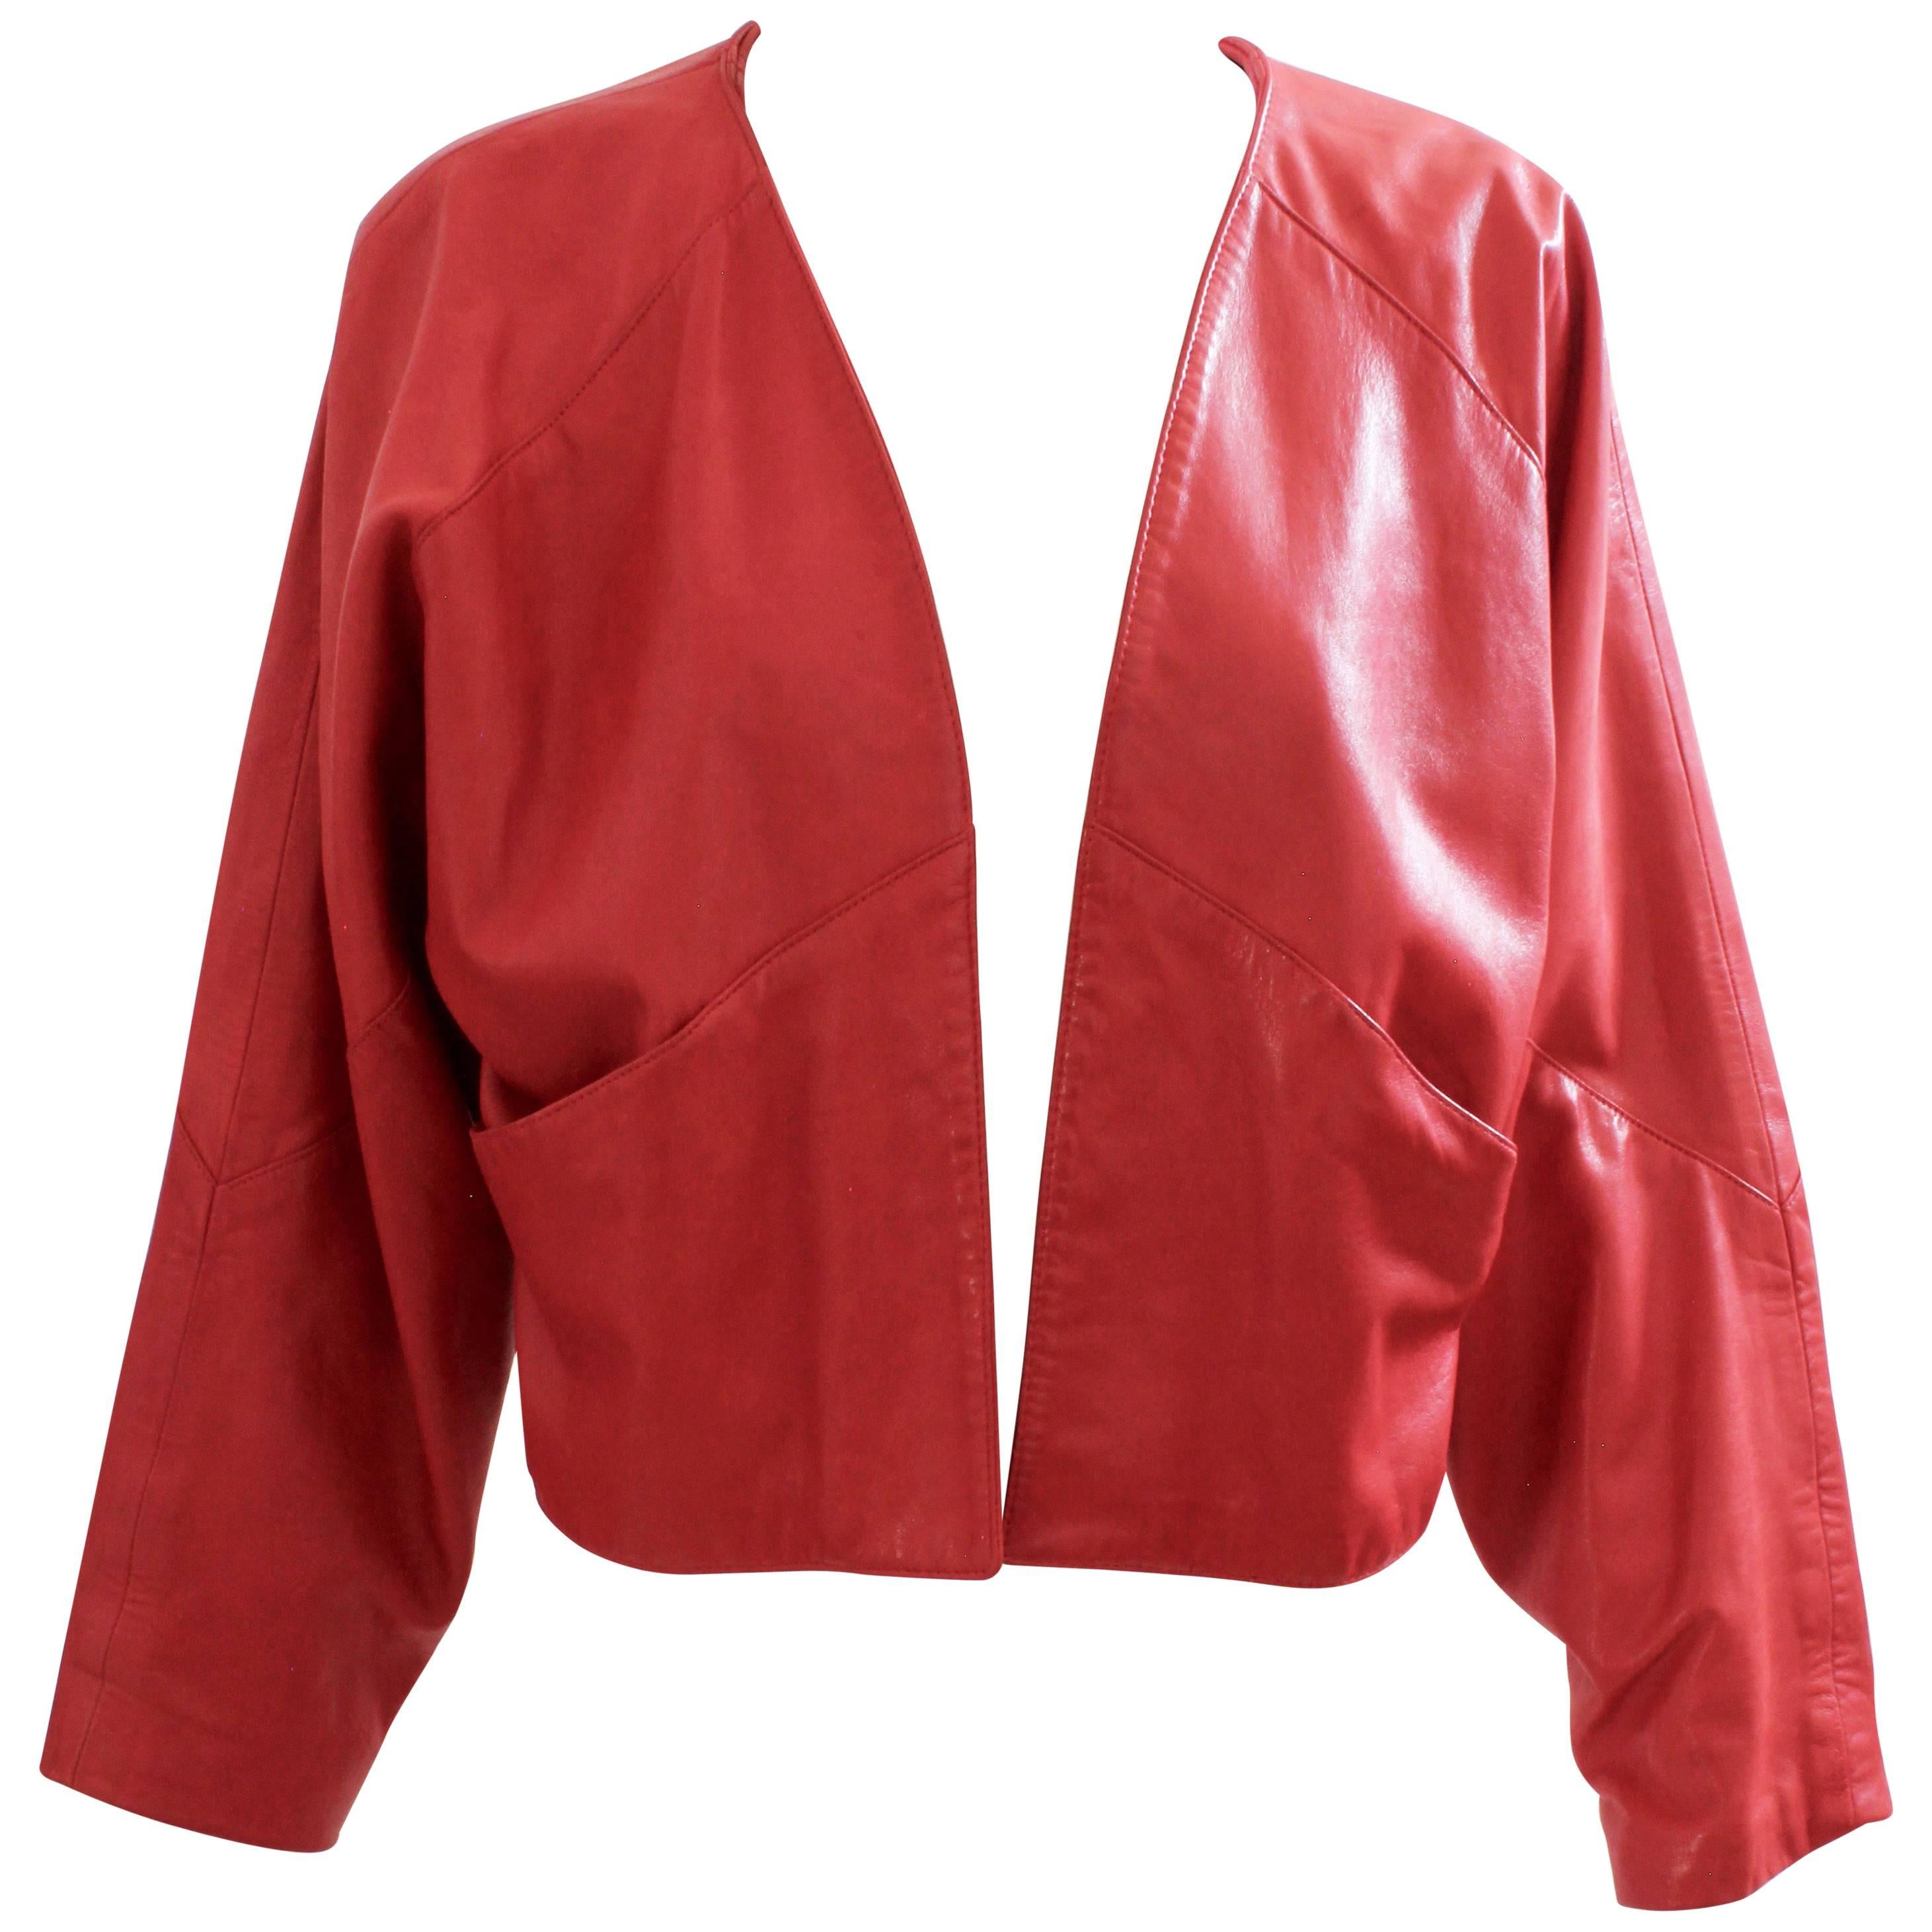 Red Leather Jacket Retro 80s Dolman Sleeves Slash Pockets Size M